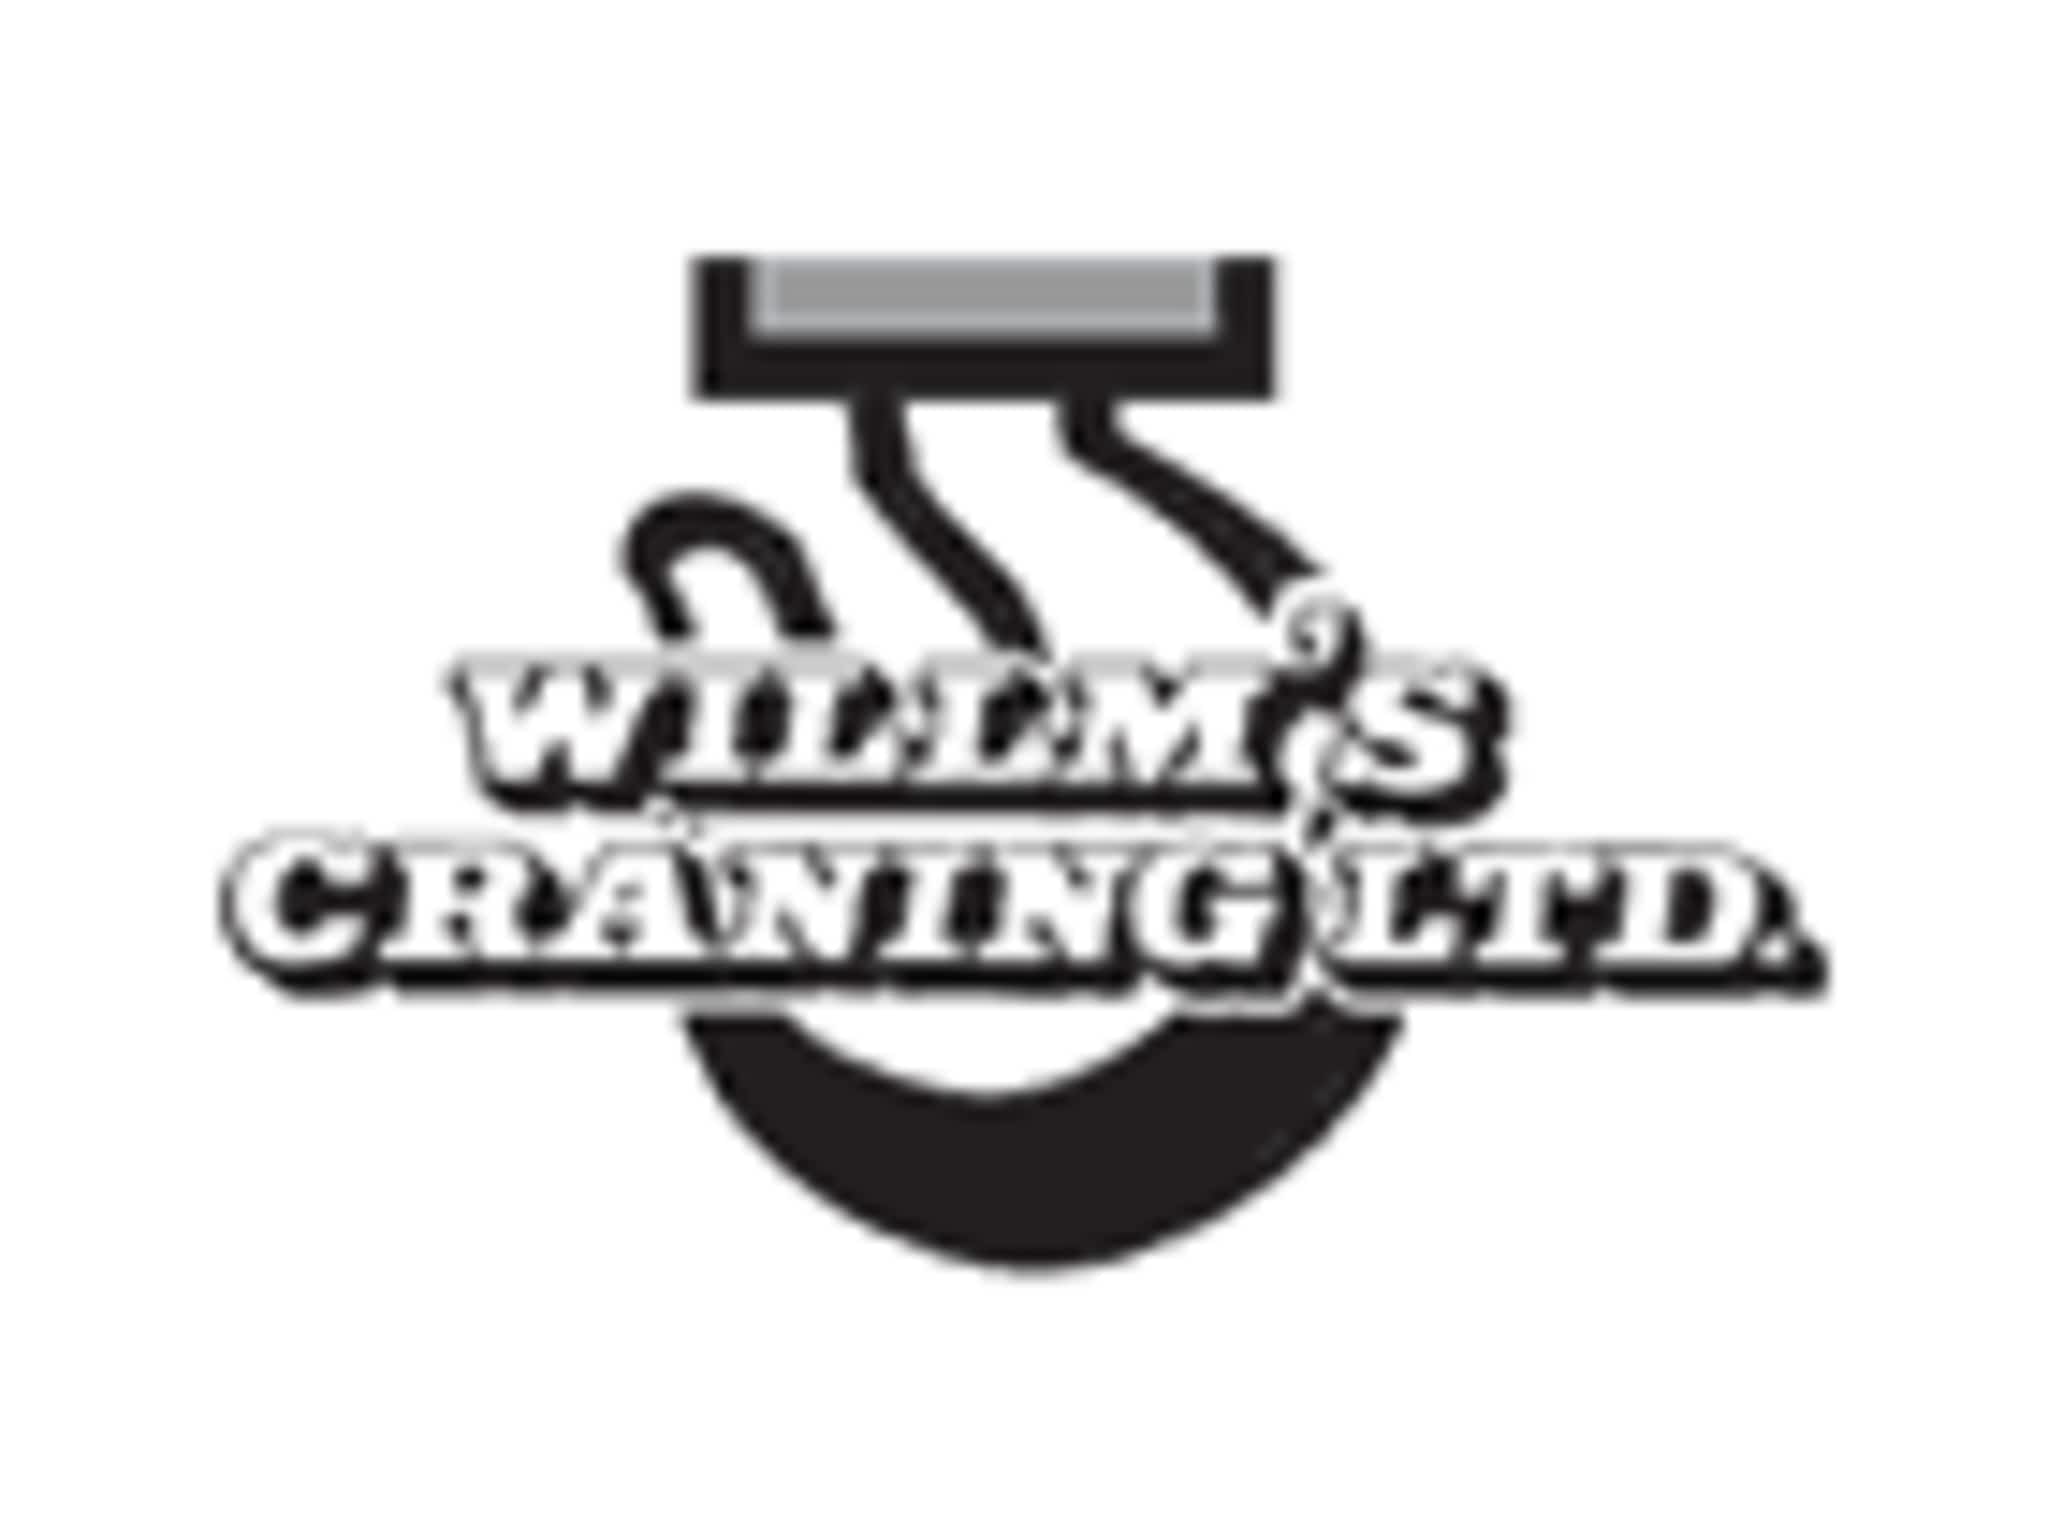 photo Willm's Craning Ltd